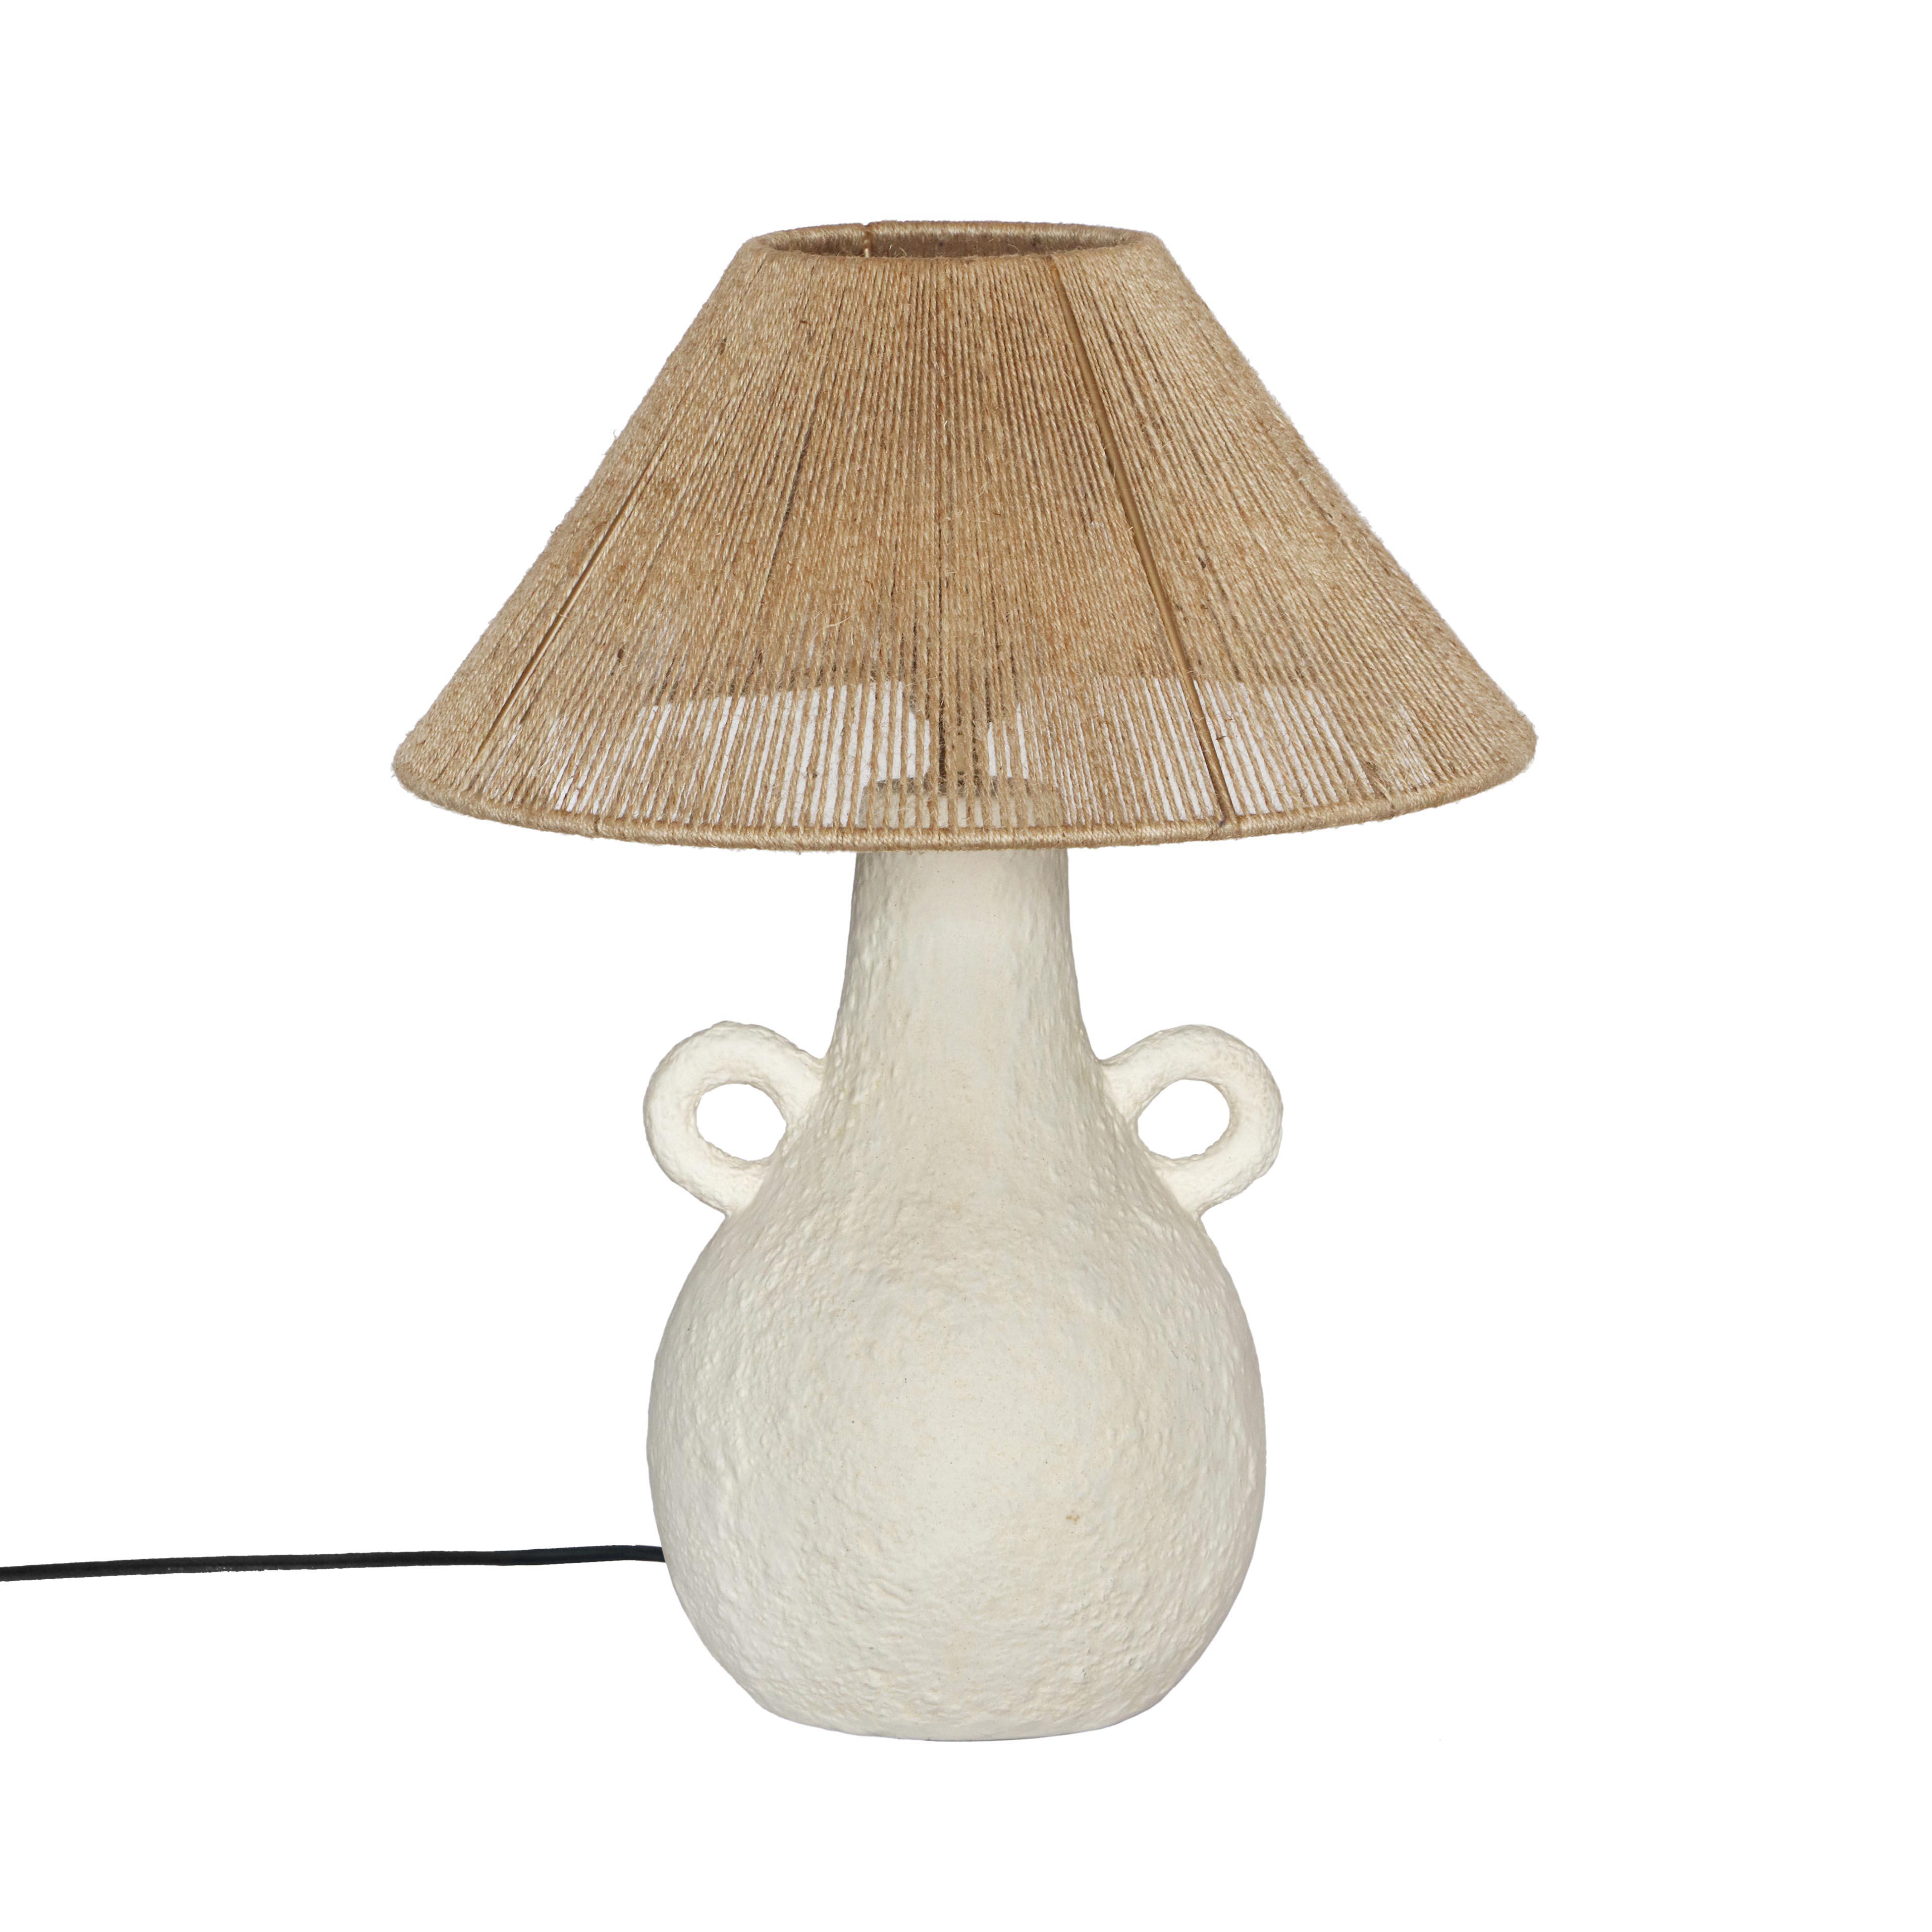 Tov Furniture Table Lamps - Lalit Natural & White Ceramic Table Lamp